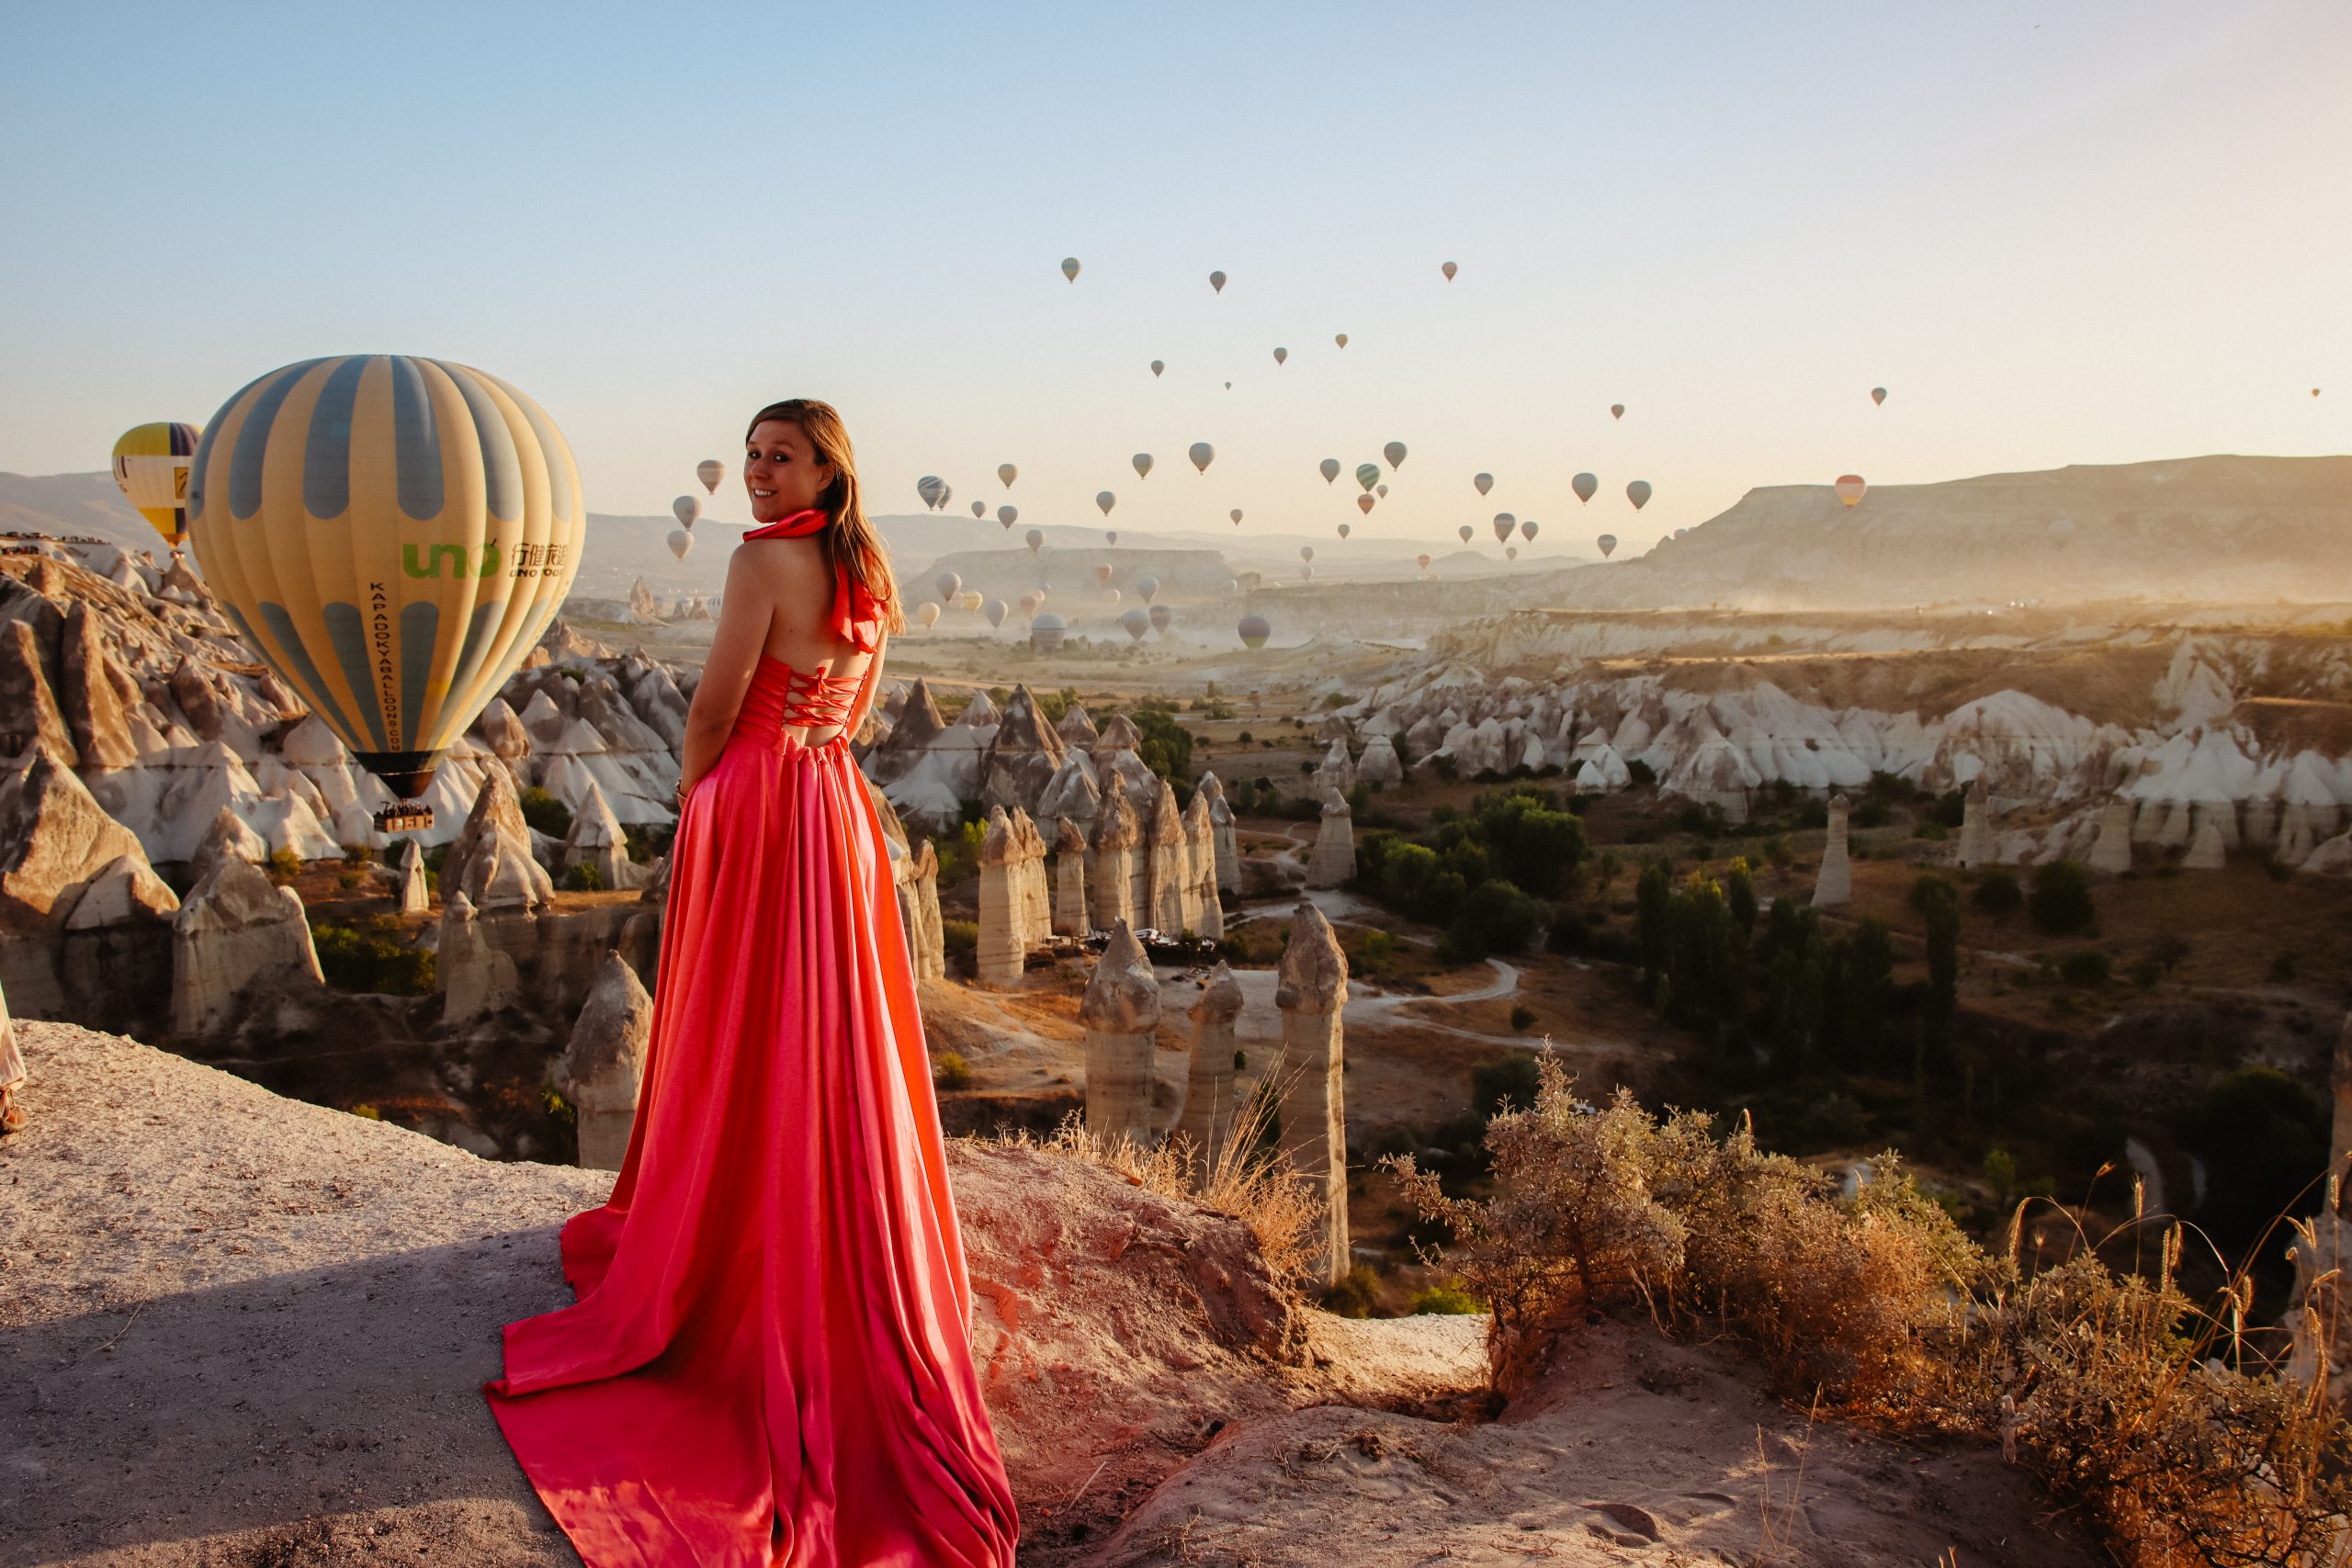 Cappadocia sunrise balloons love valley